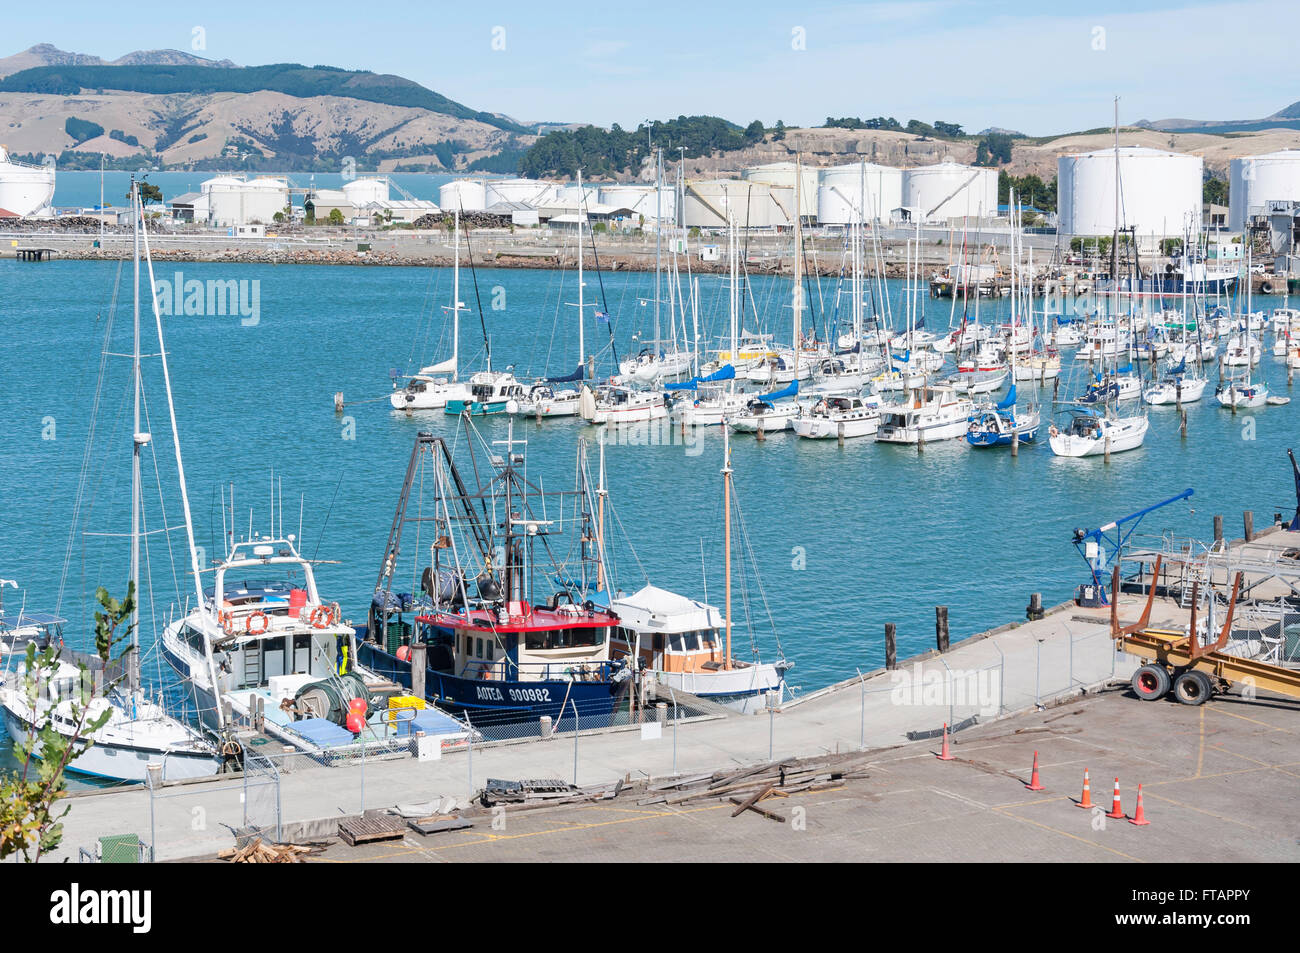 Fishing boats and yachts in harbour, Lyttelton, Lyttelton Harbour, Banks Peninsula, Canterbury, New Zealand Stock Photo